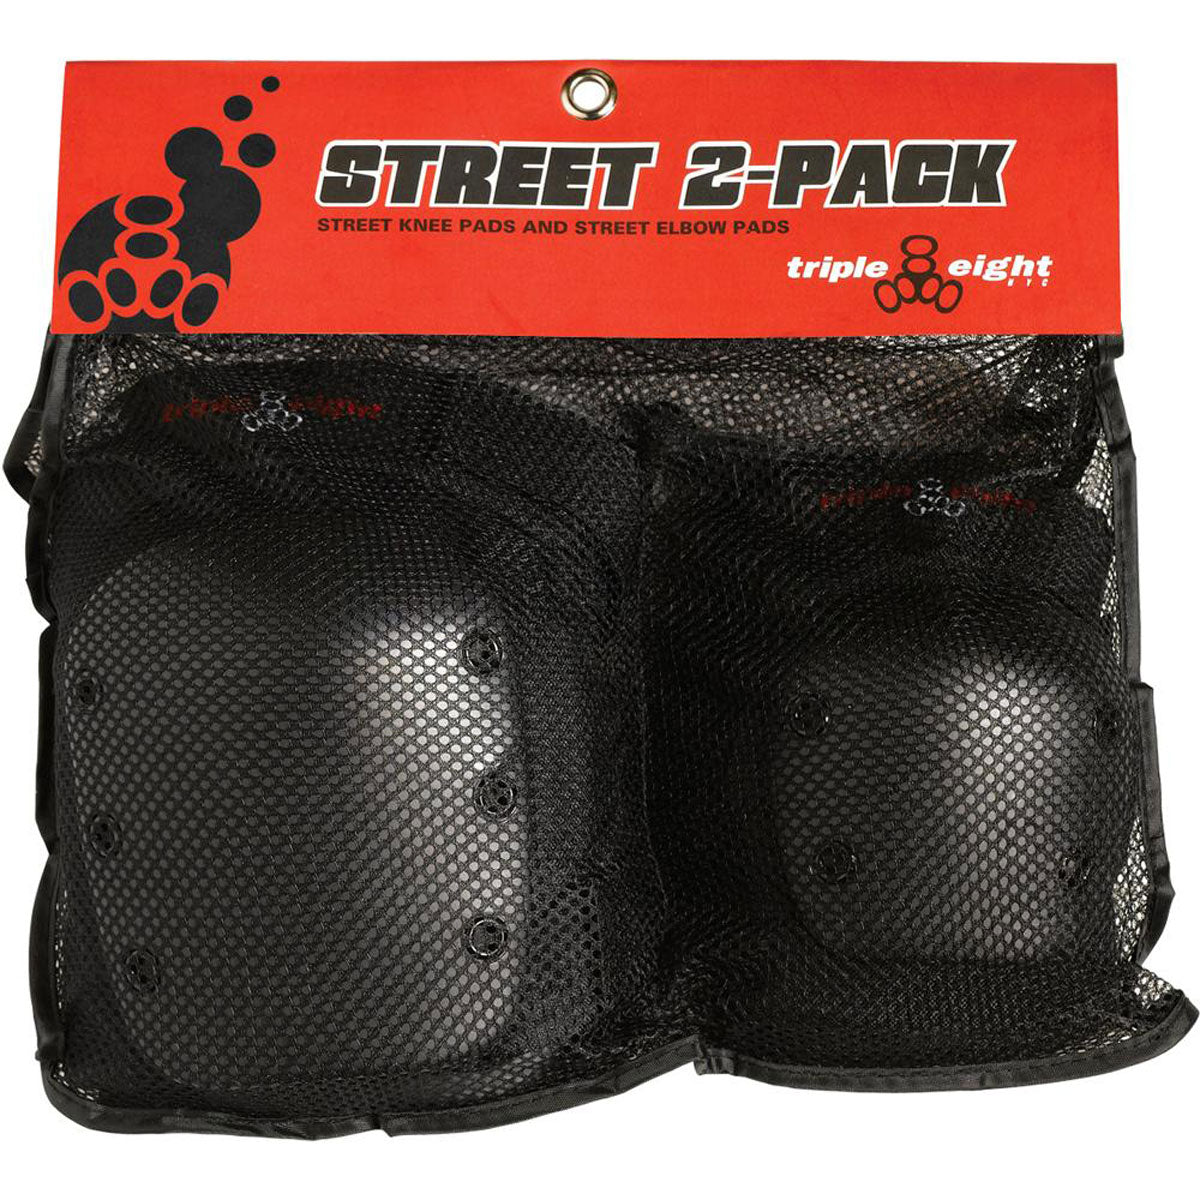 Triple Eight Street 2 Pack Pads - Black image 1